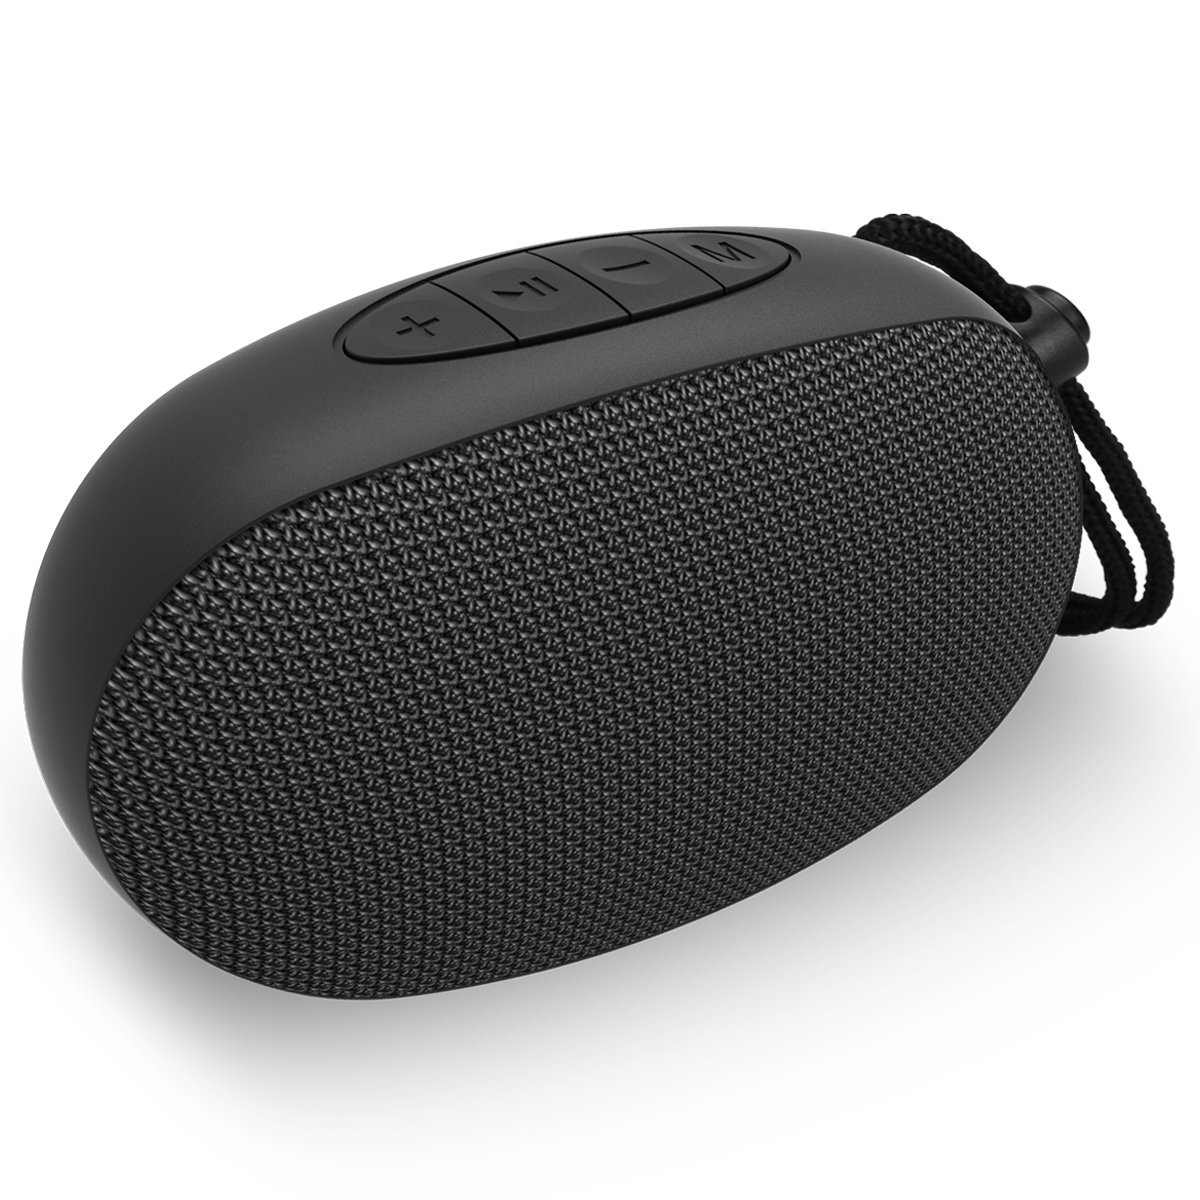 LFS wireless 10W Bluetooth speaker for $13 with code